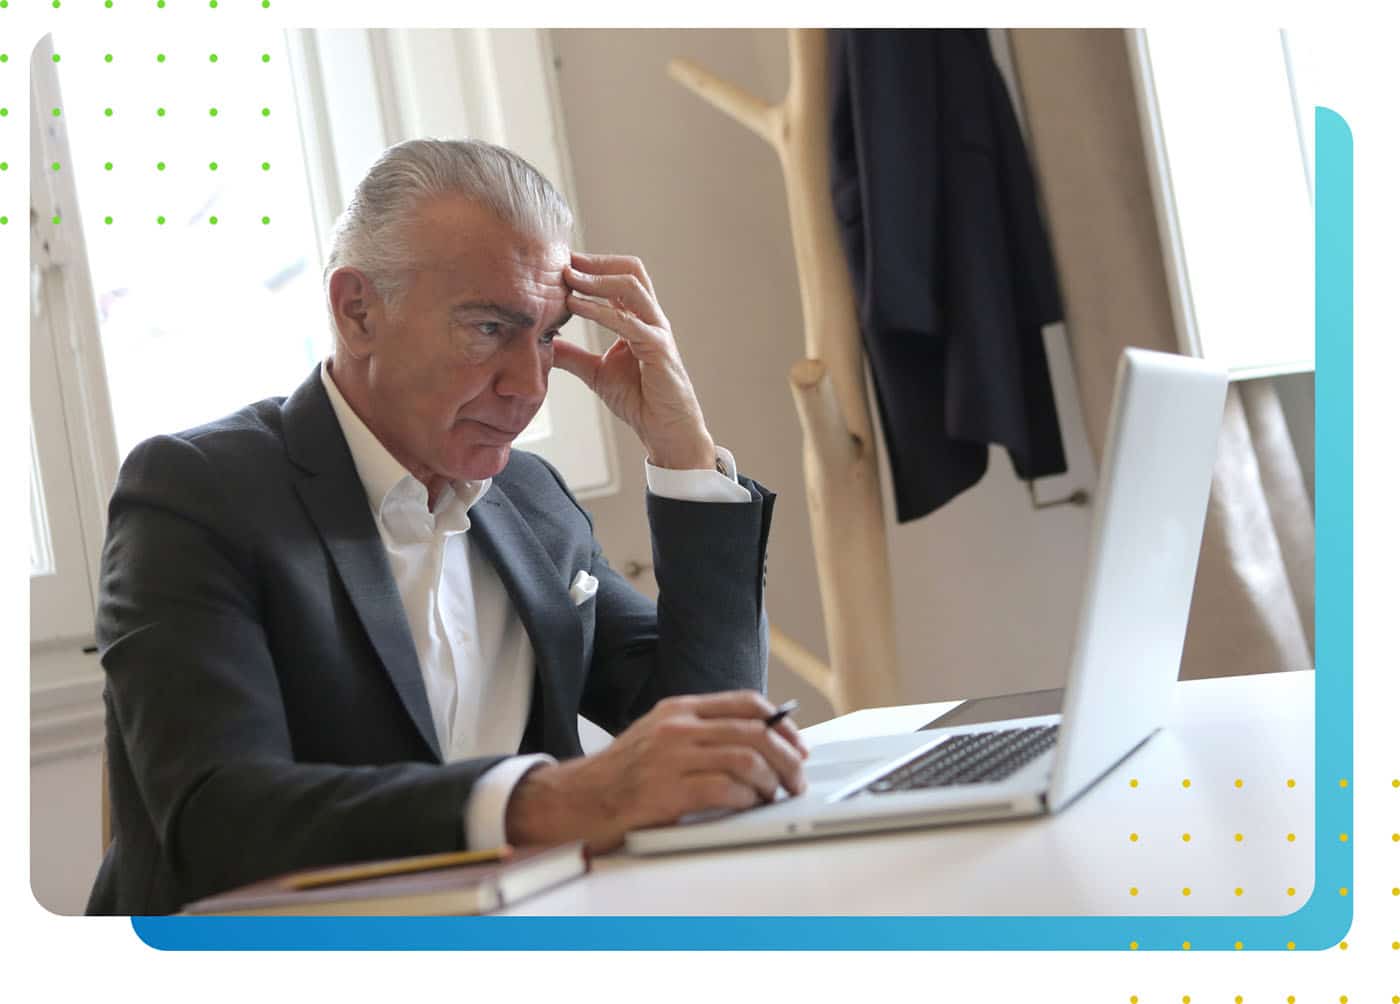 An elderly man in front of a laptop - LeanLaw